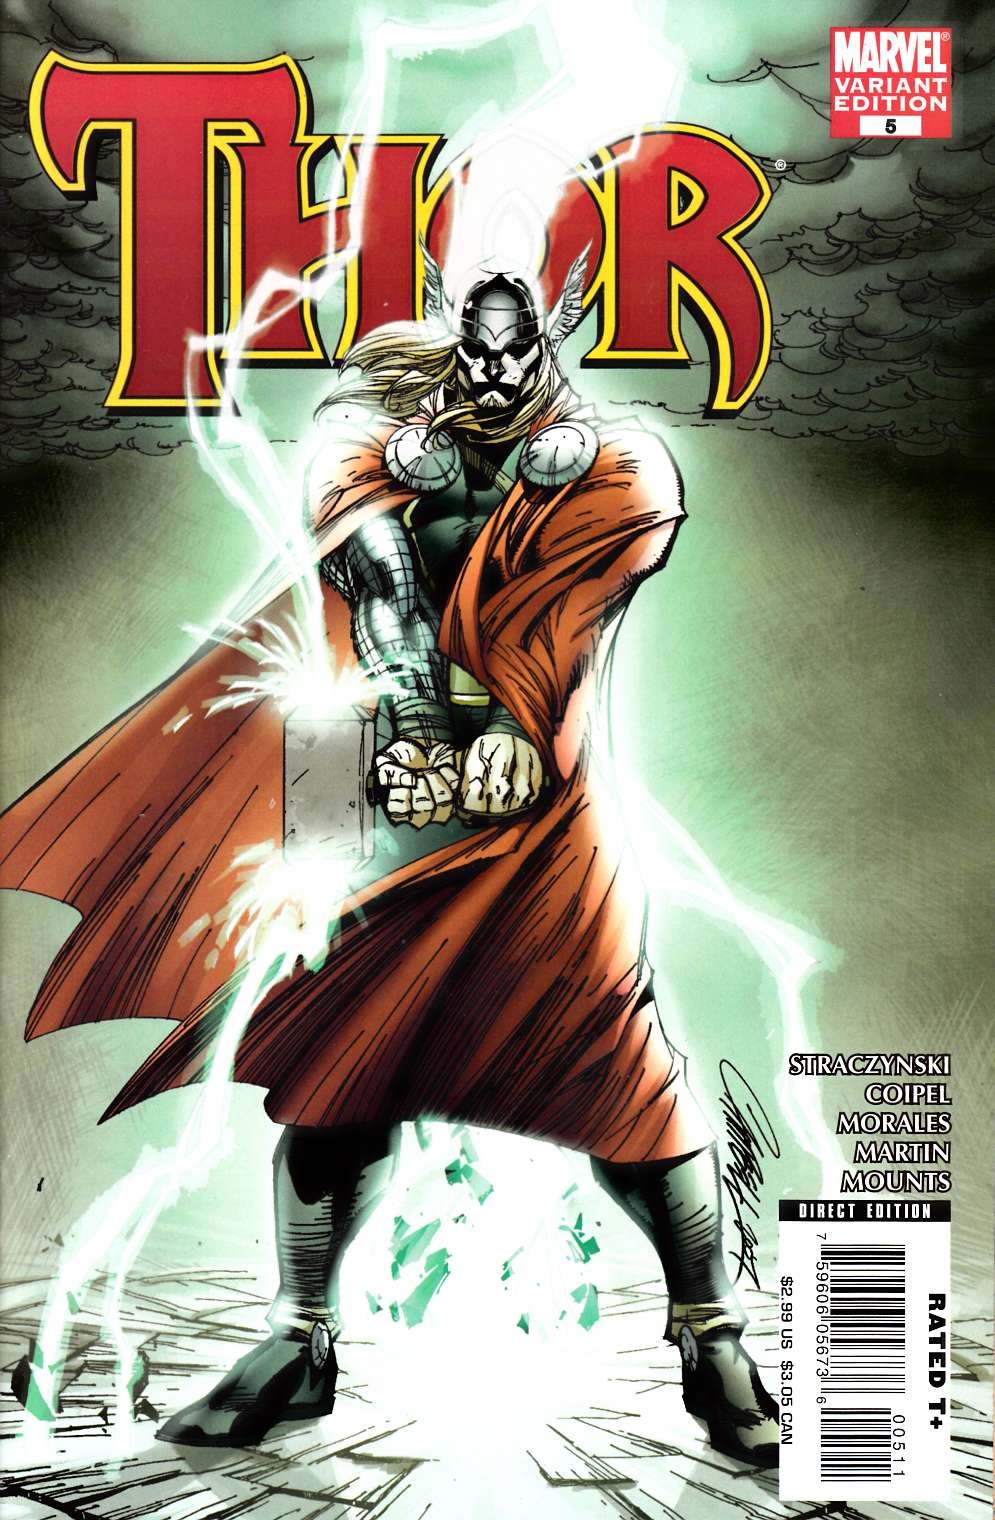 Thor #5 Cover B Near Mint (9.4) [Marvel Comic]